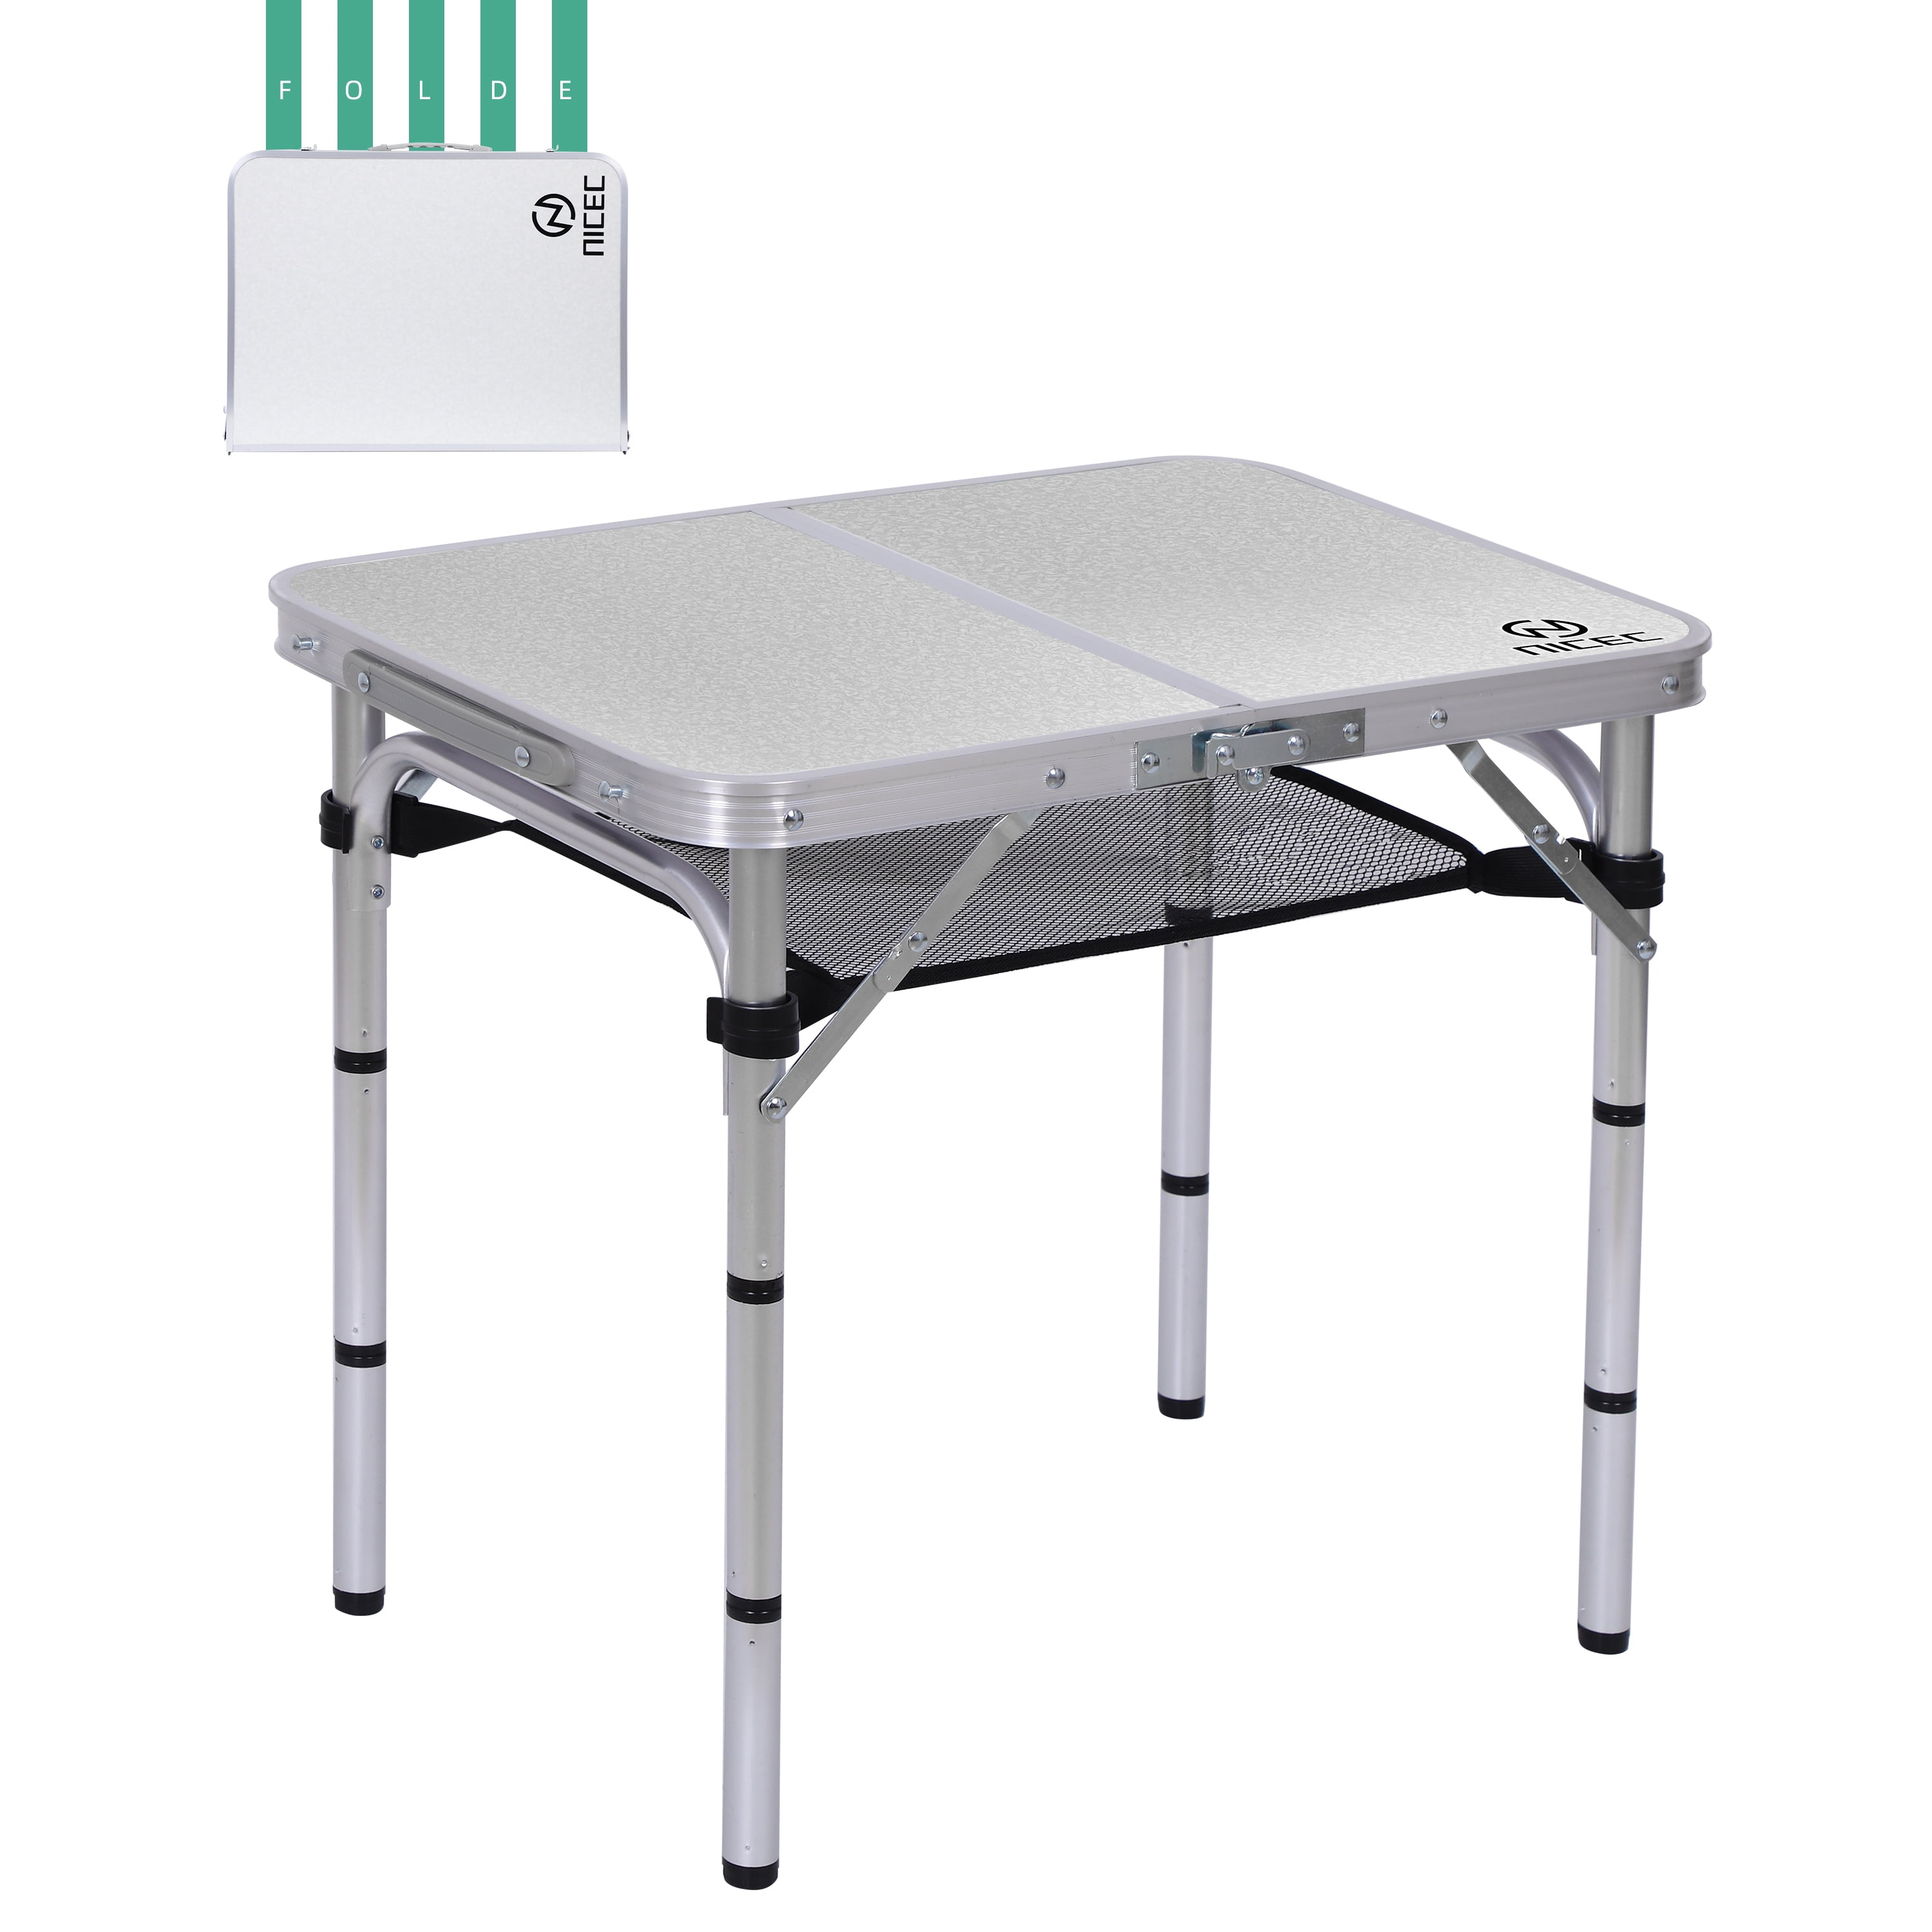 Sportneer Aluminium Camping Table, Portable Lightweight Aluminum